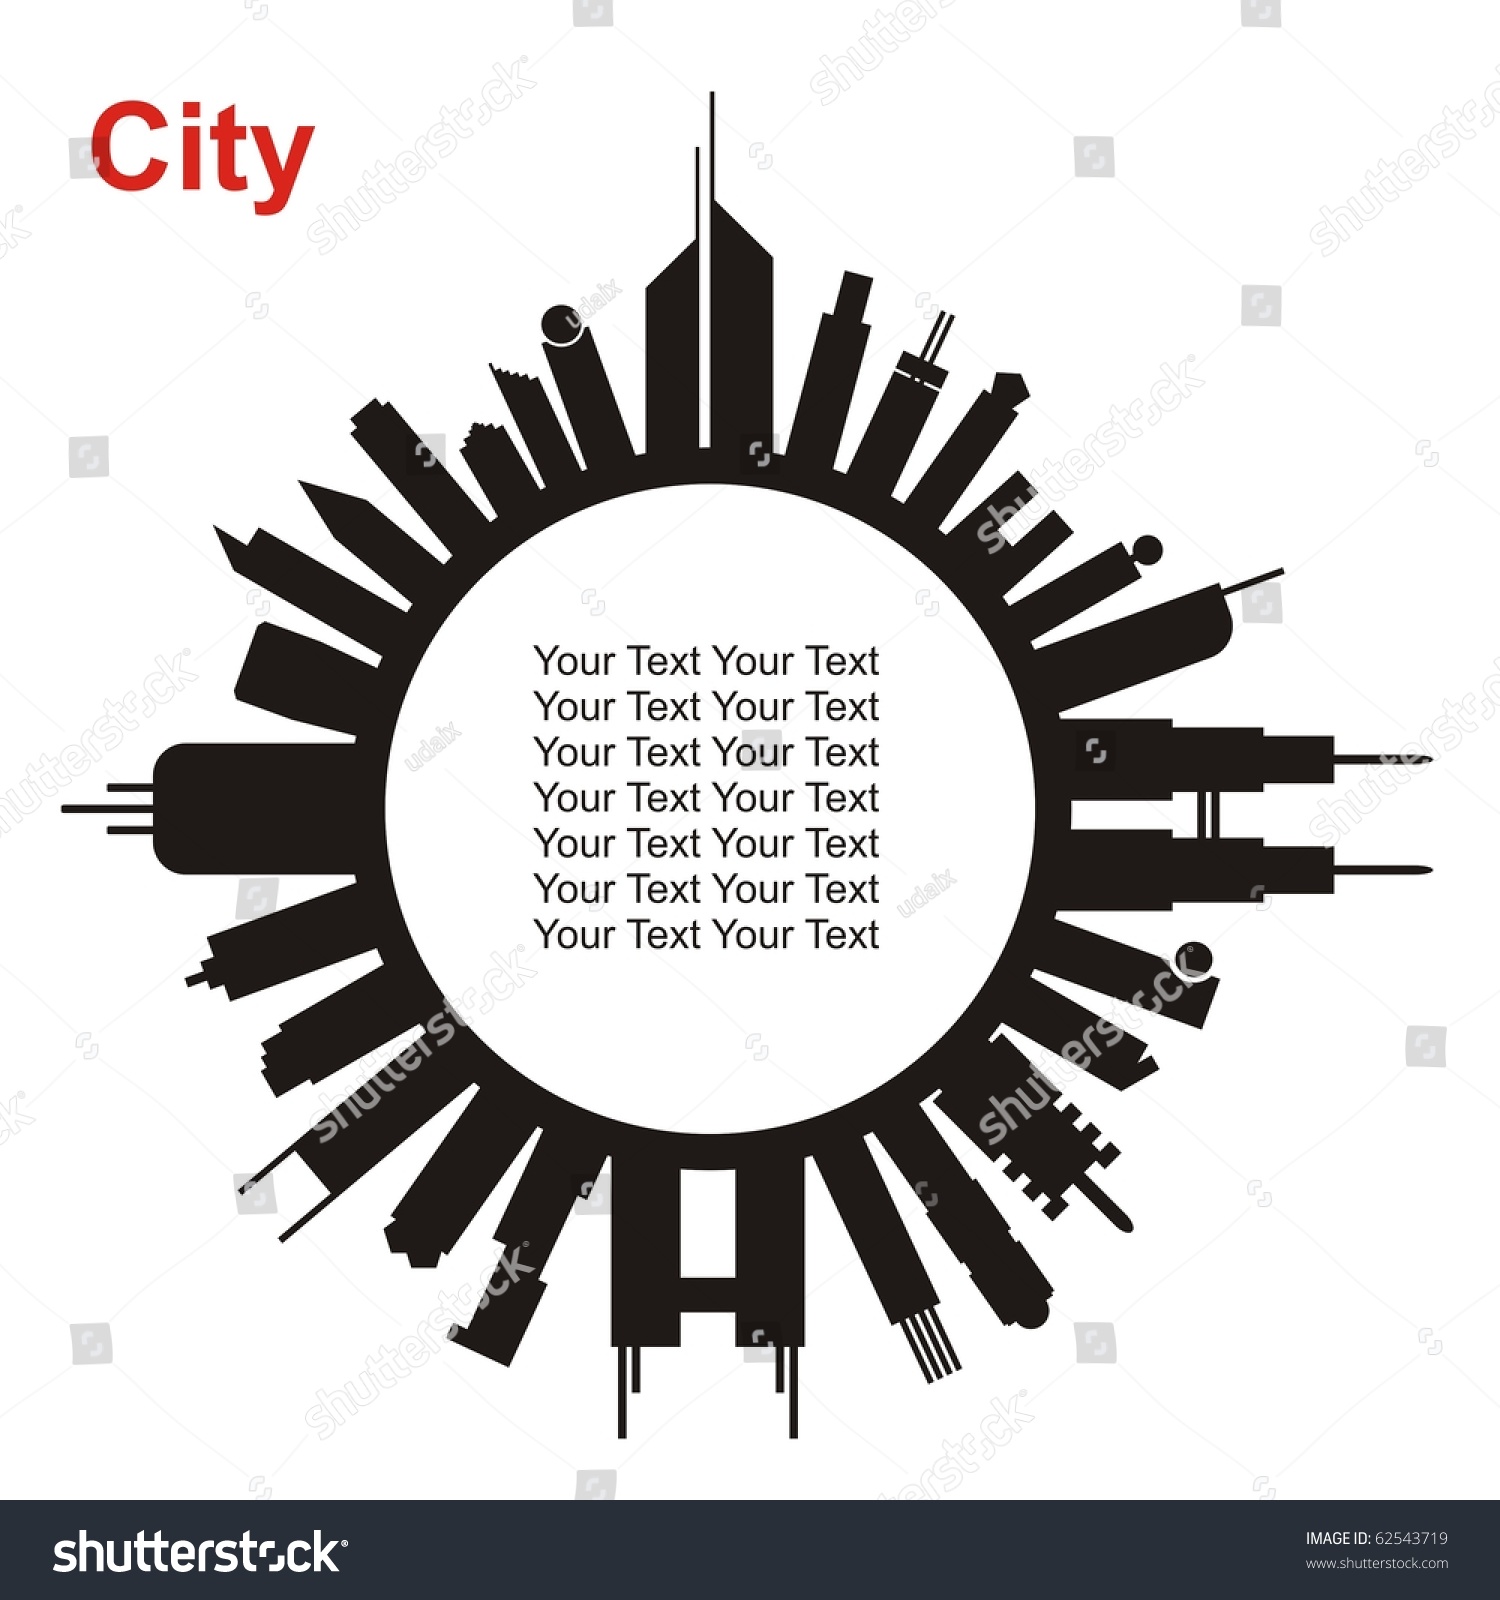 stock-vector-vector-city-in-circle-shape-buildings-towers-62543719.jpg